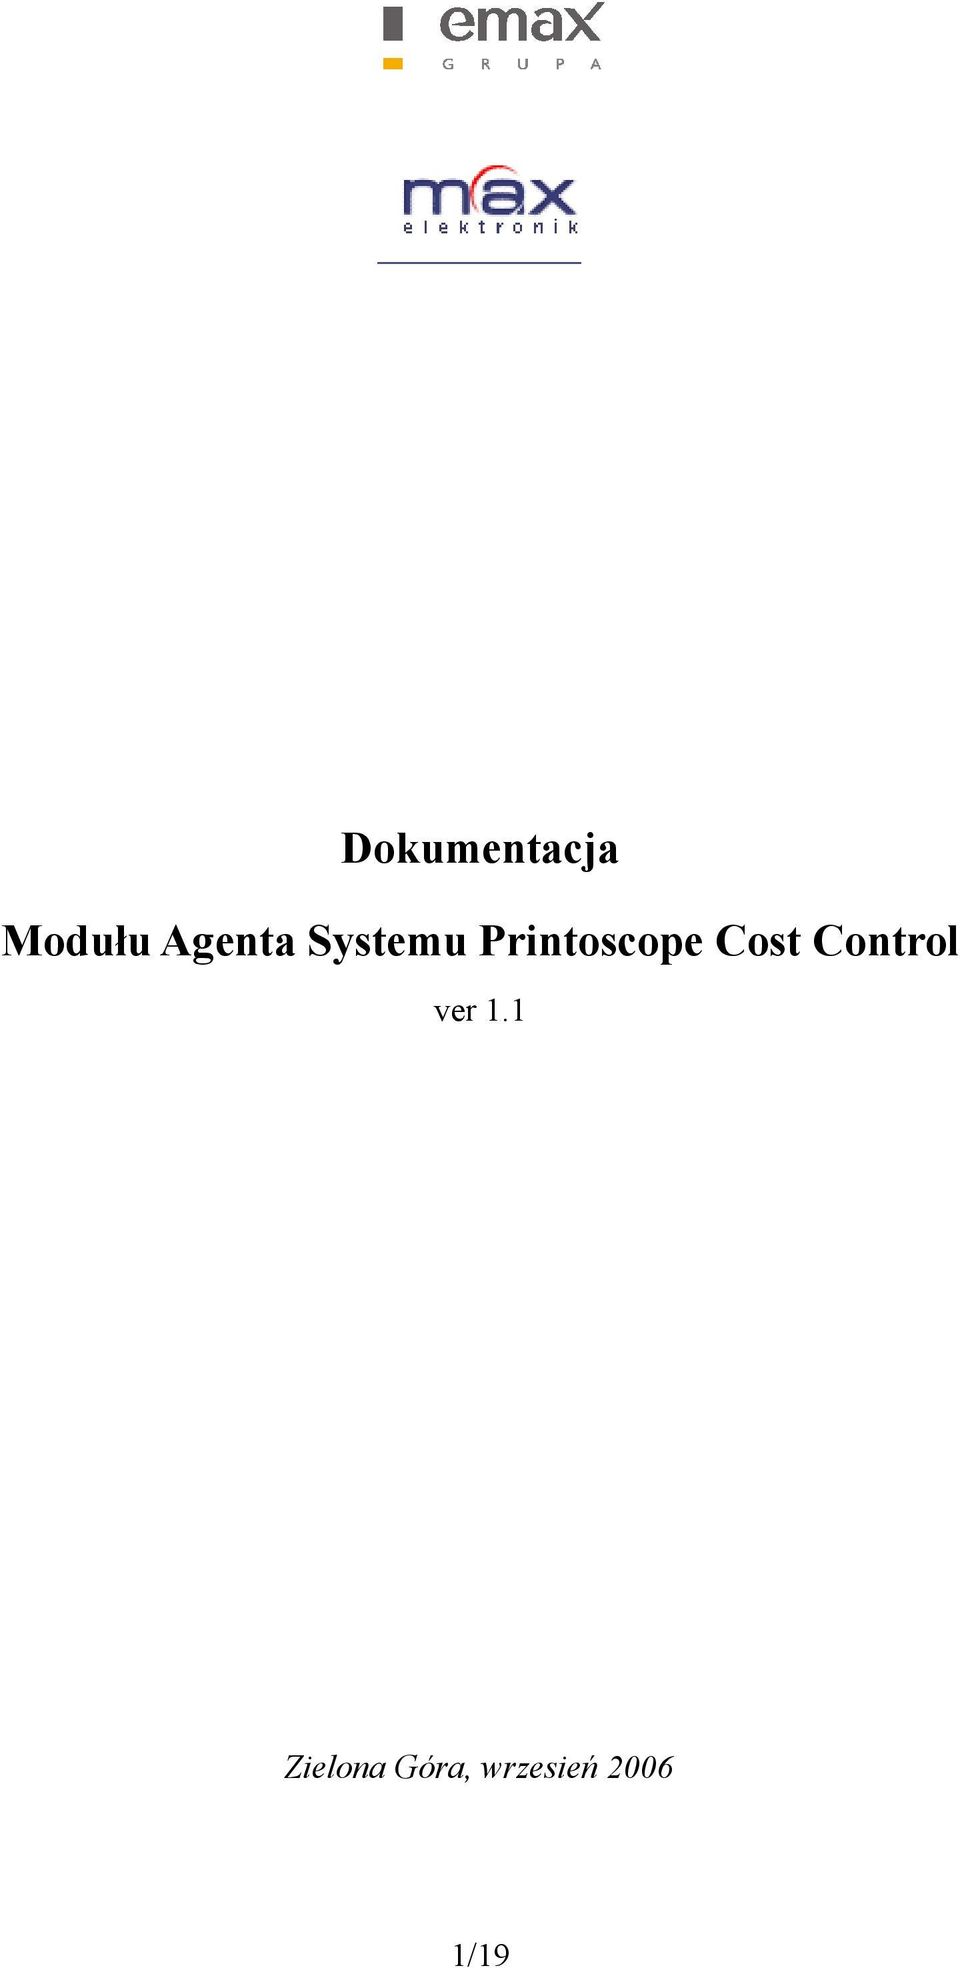 Printoscope Cost Control